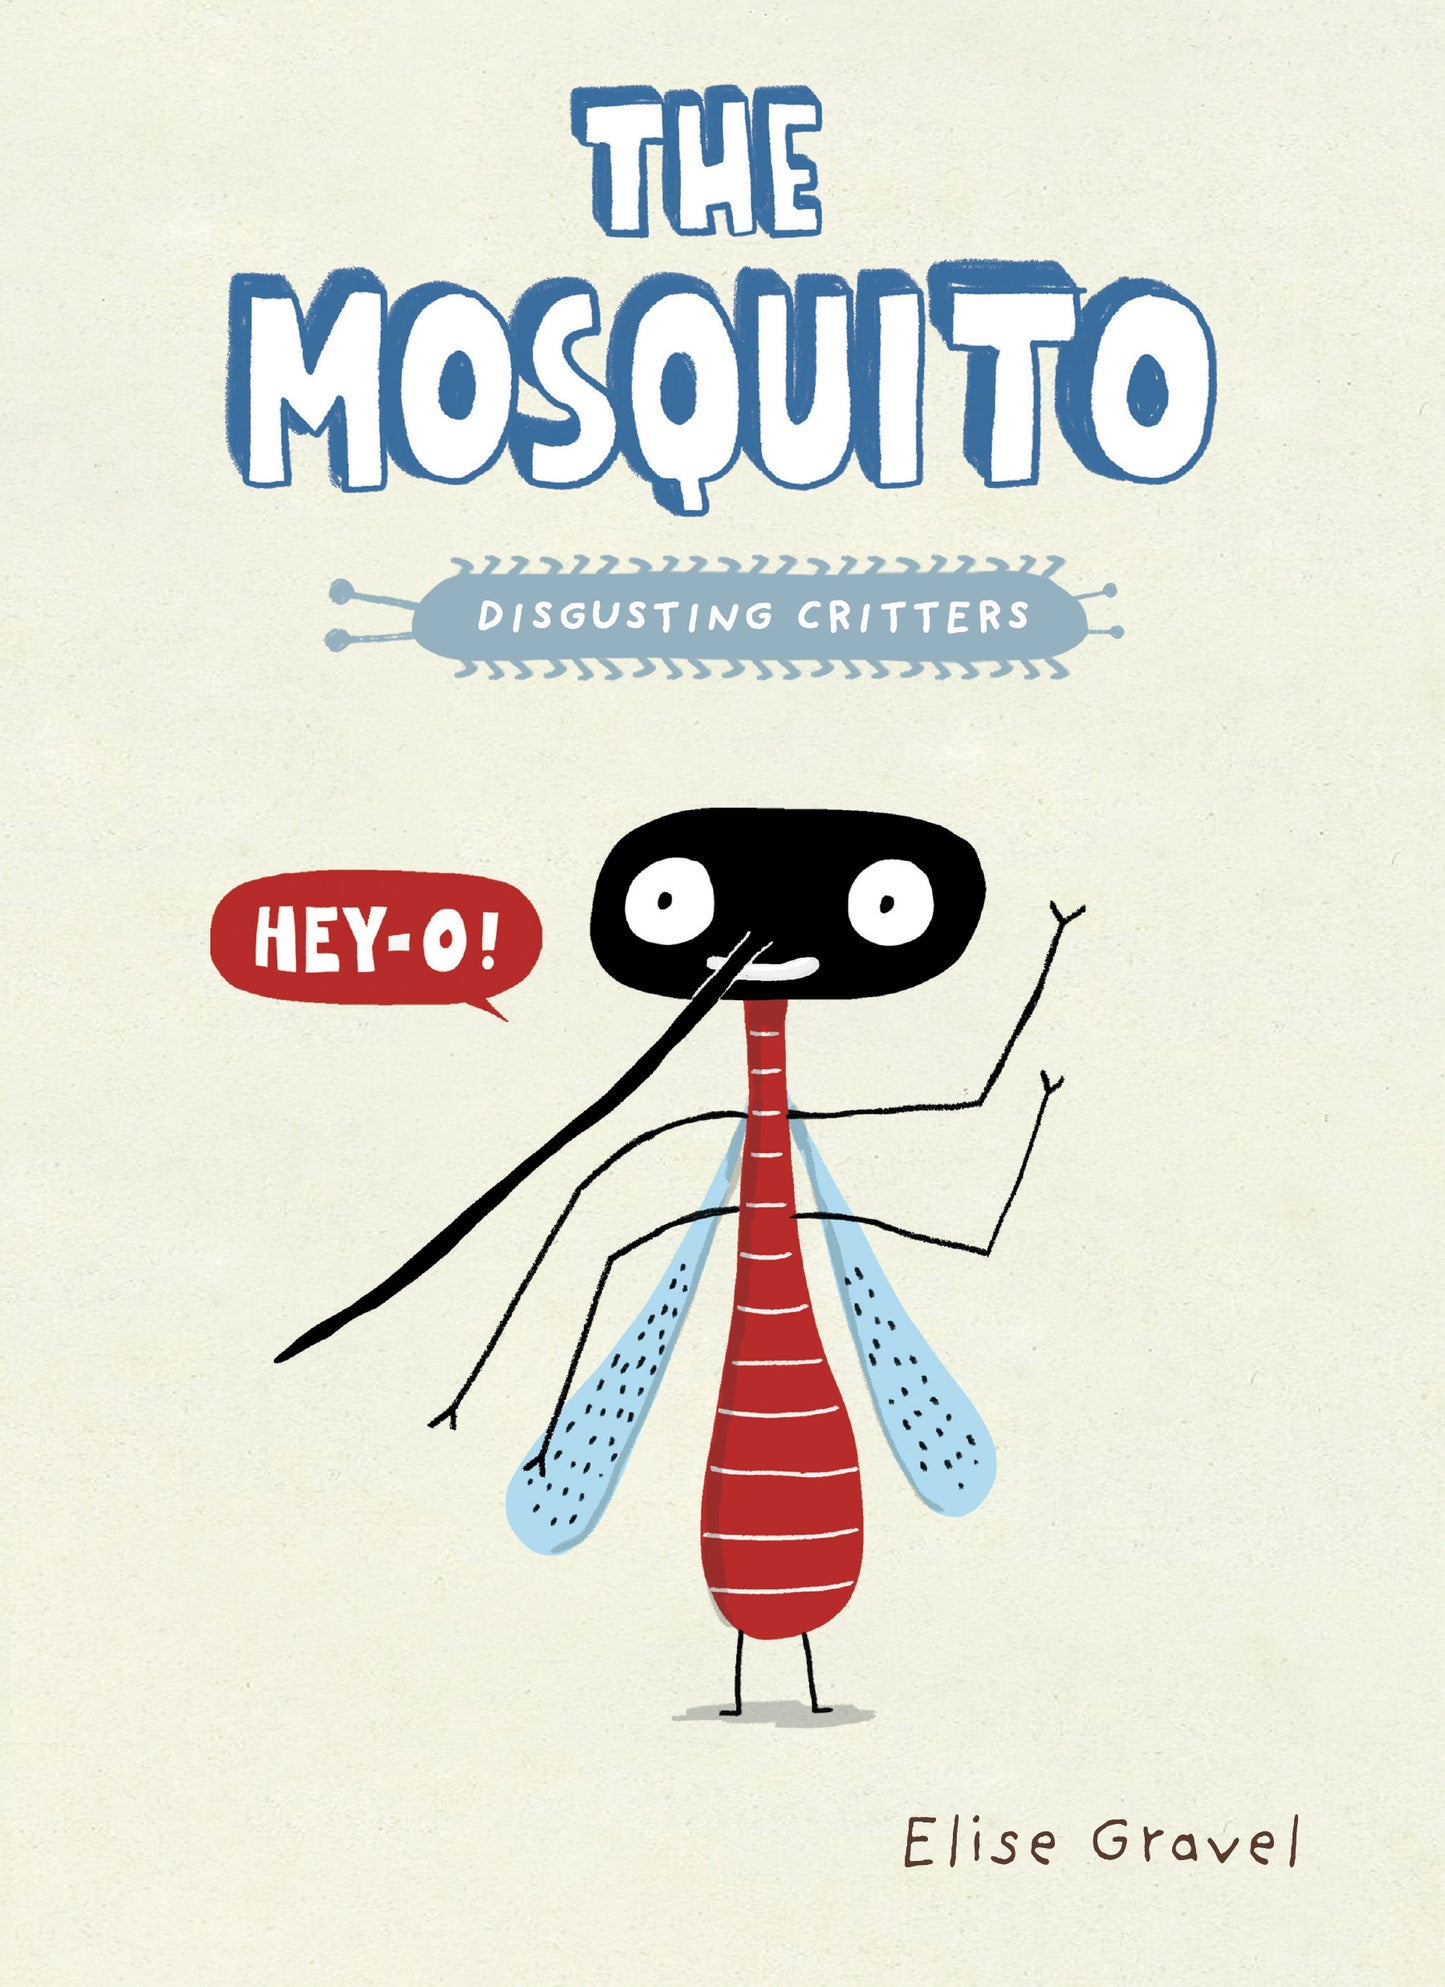 Mosquito, The